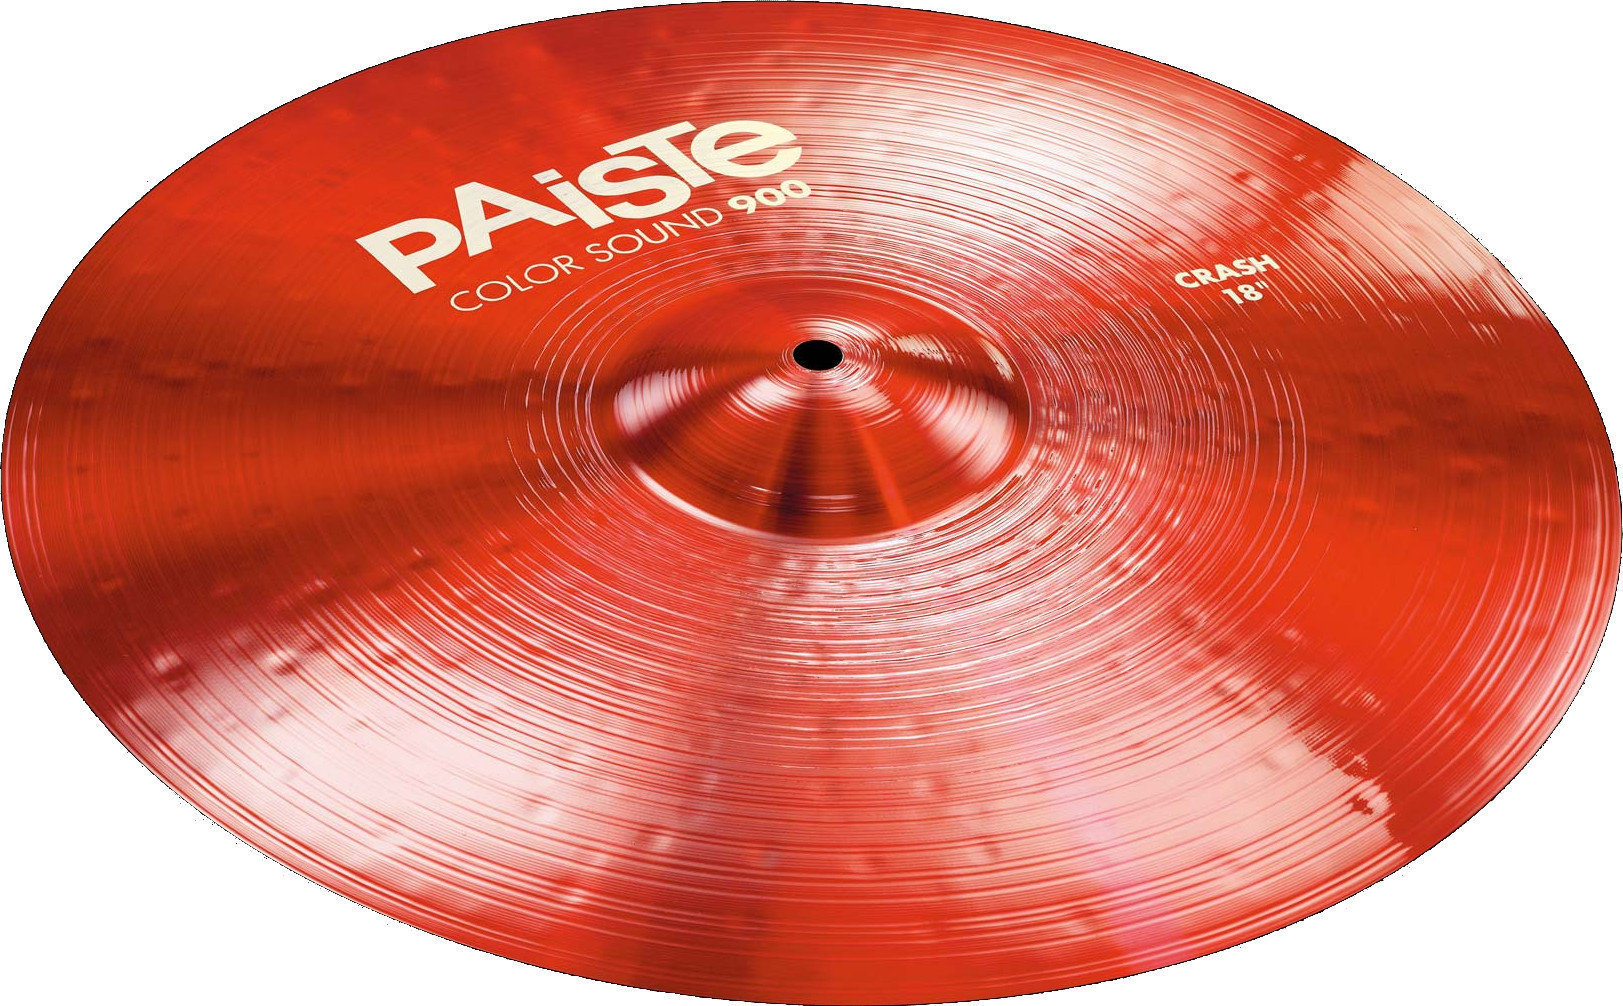 Crash Cymbal Paiste Color Sound 900 Crash Cymbal 19" Red